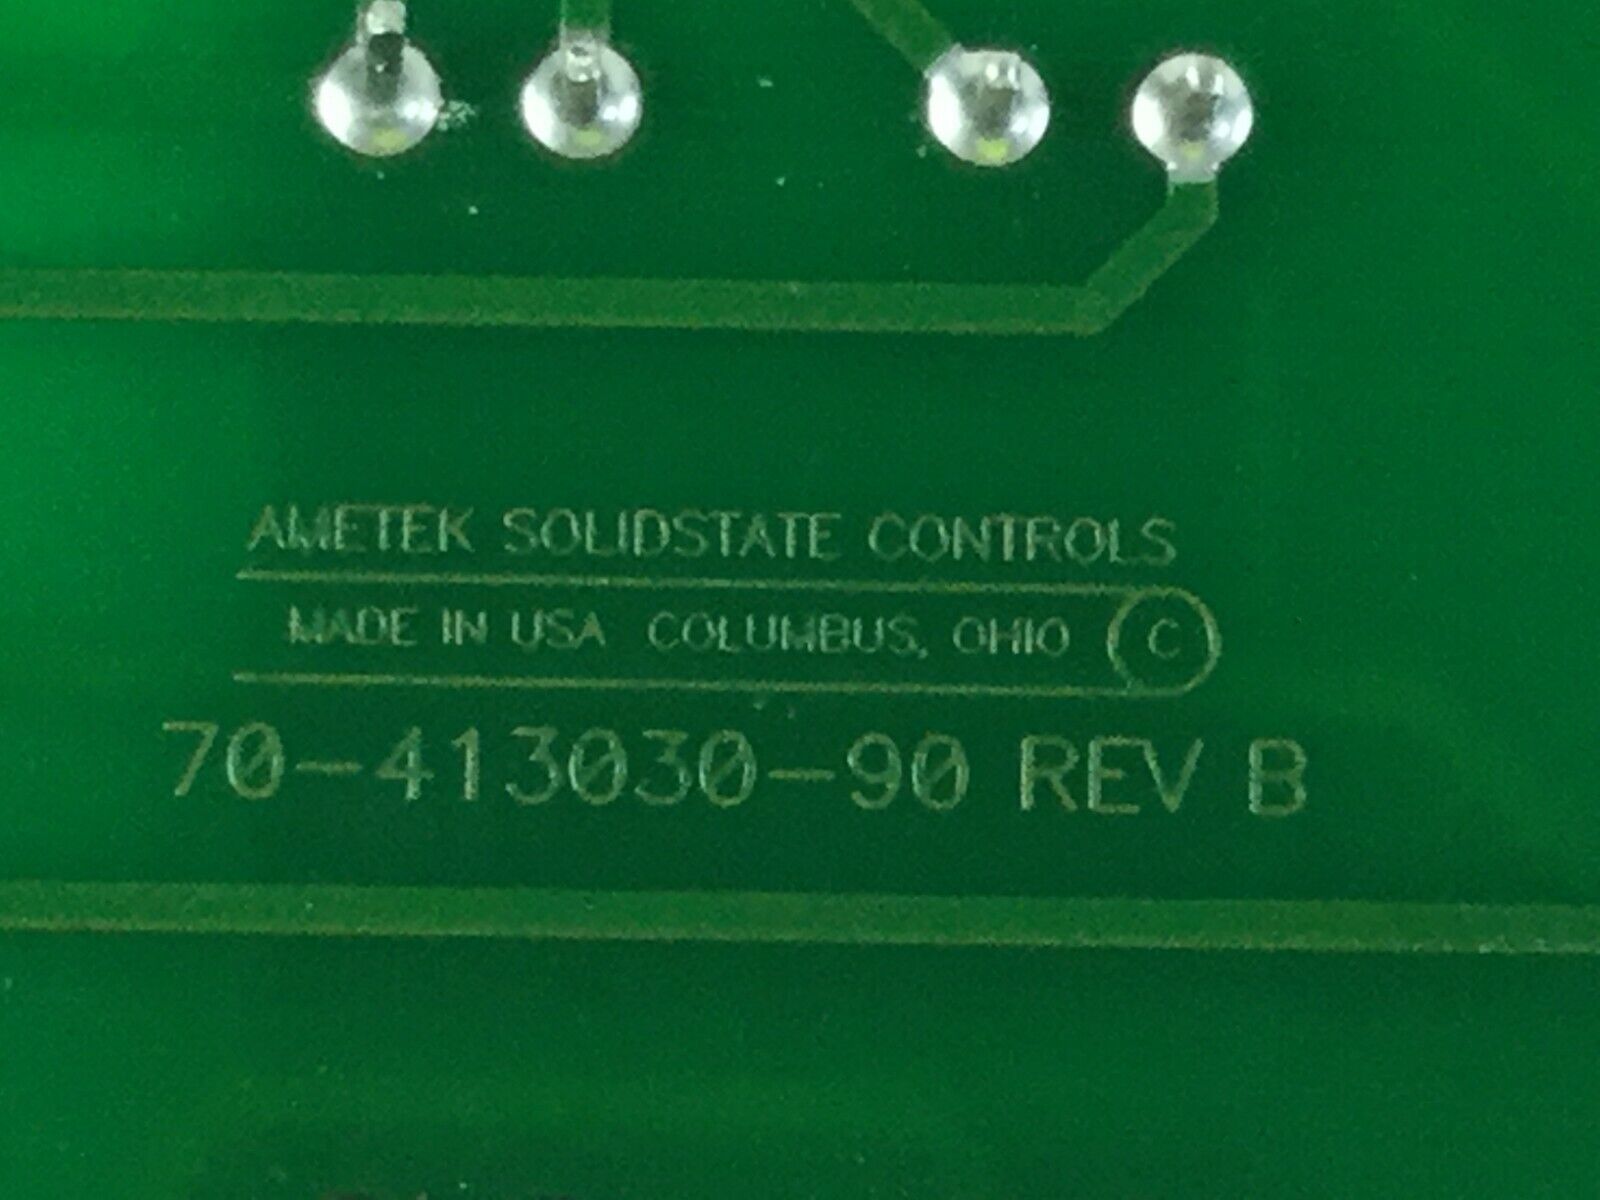 Ametek Solidstate Controls 70-413030-90 REV B Board